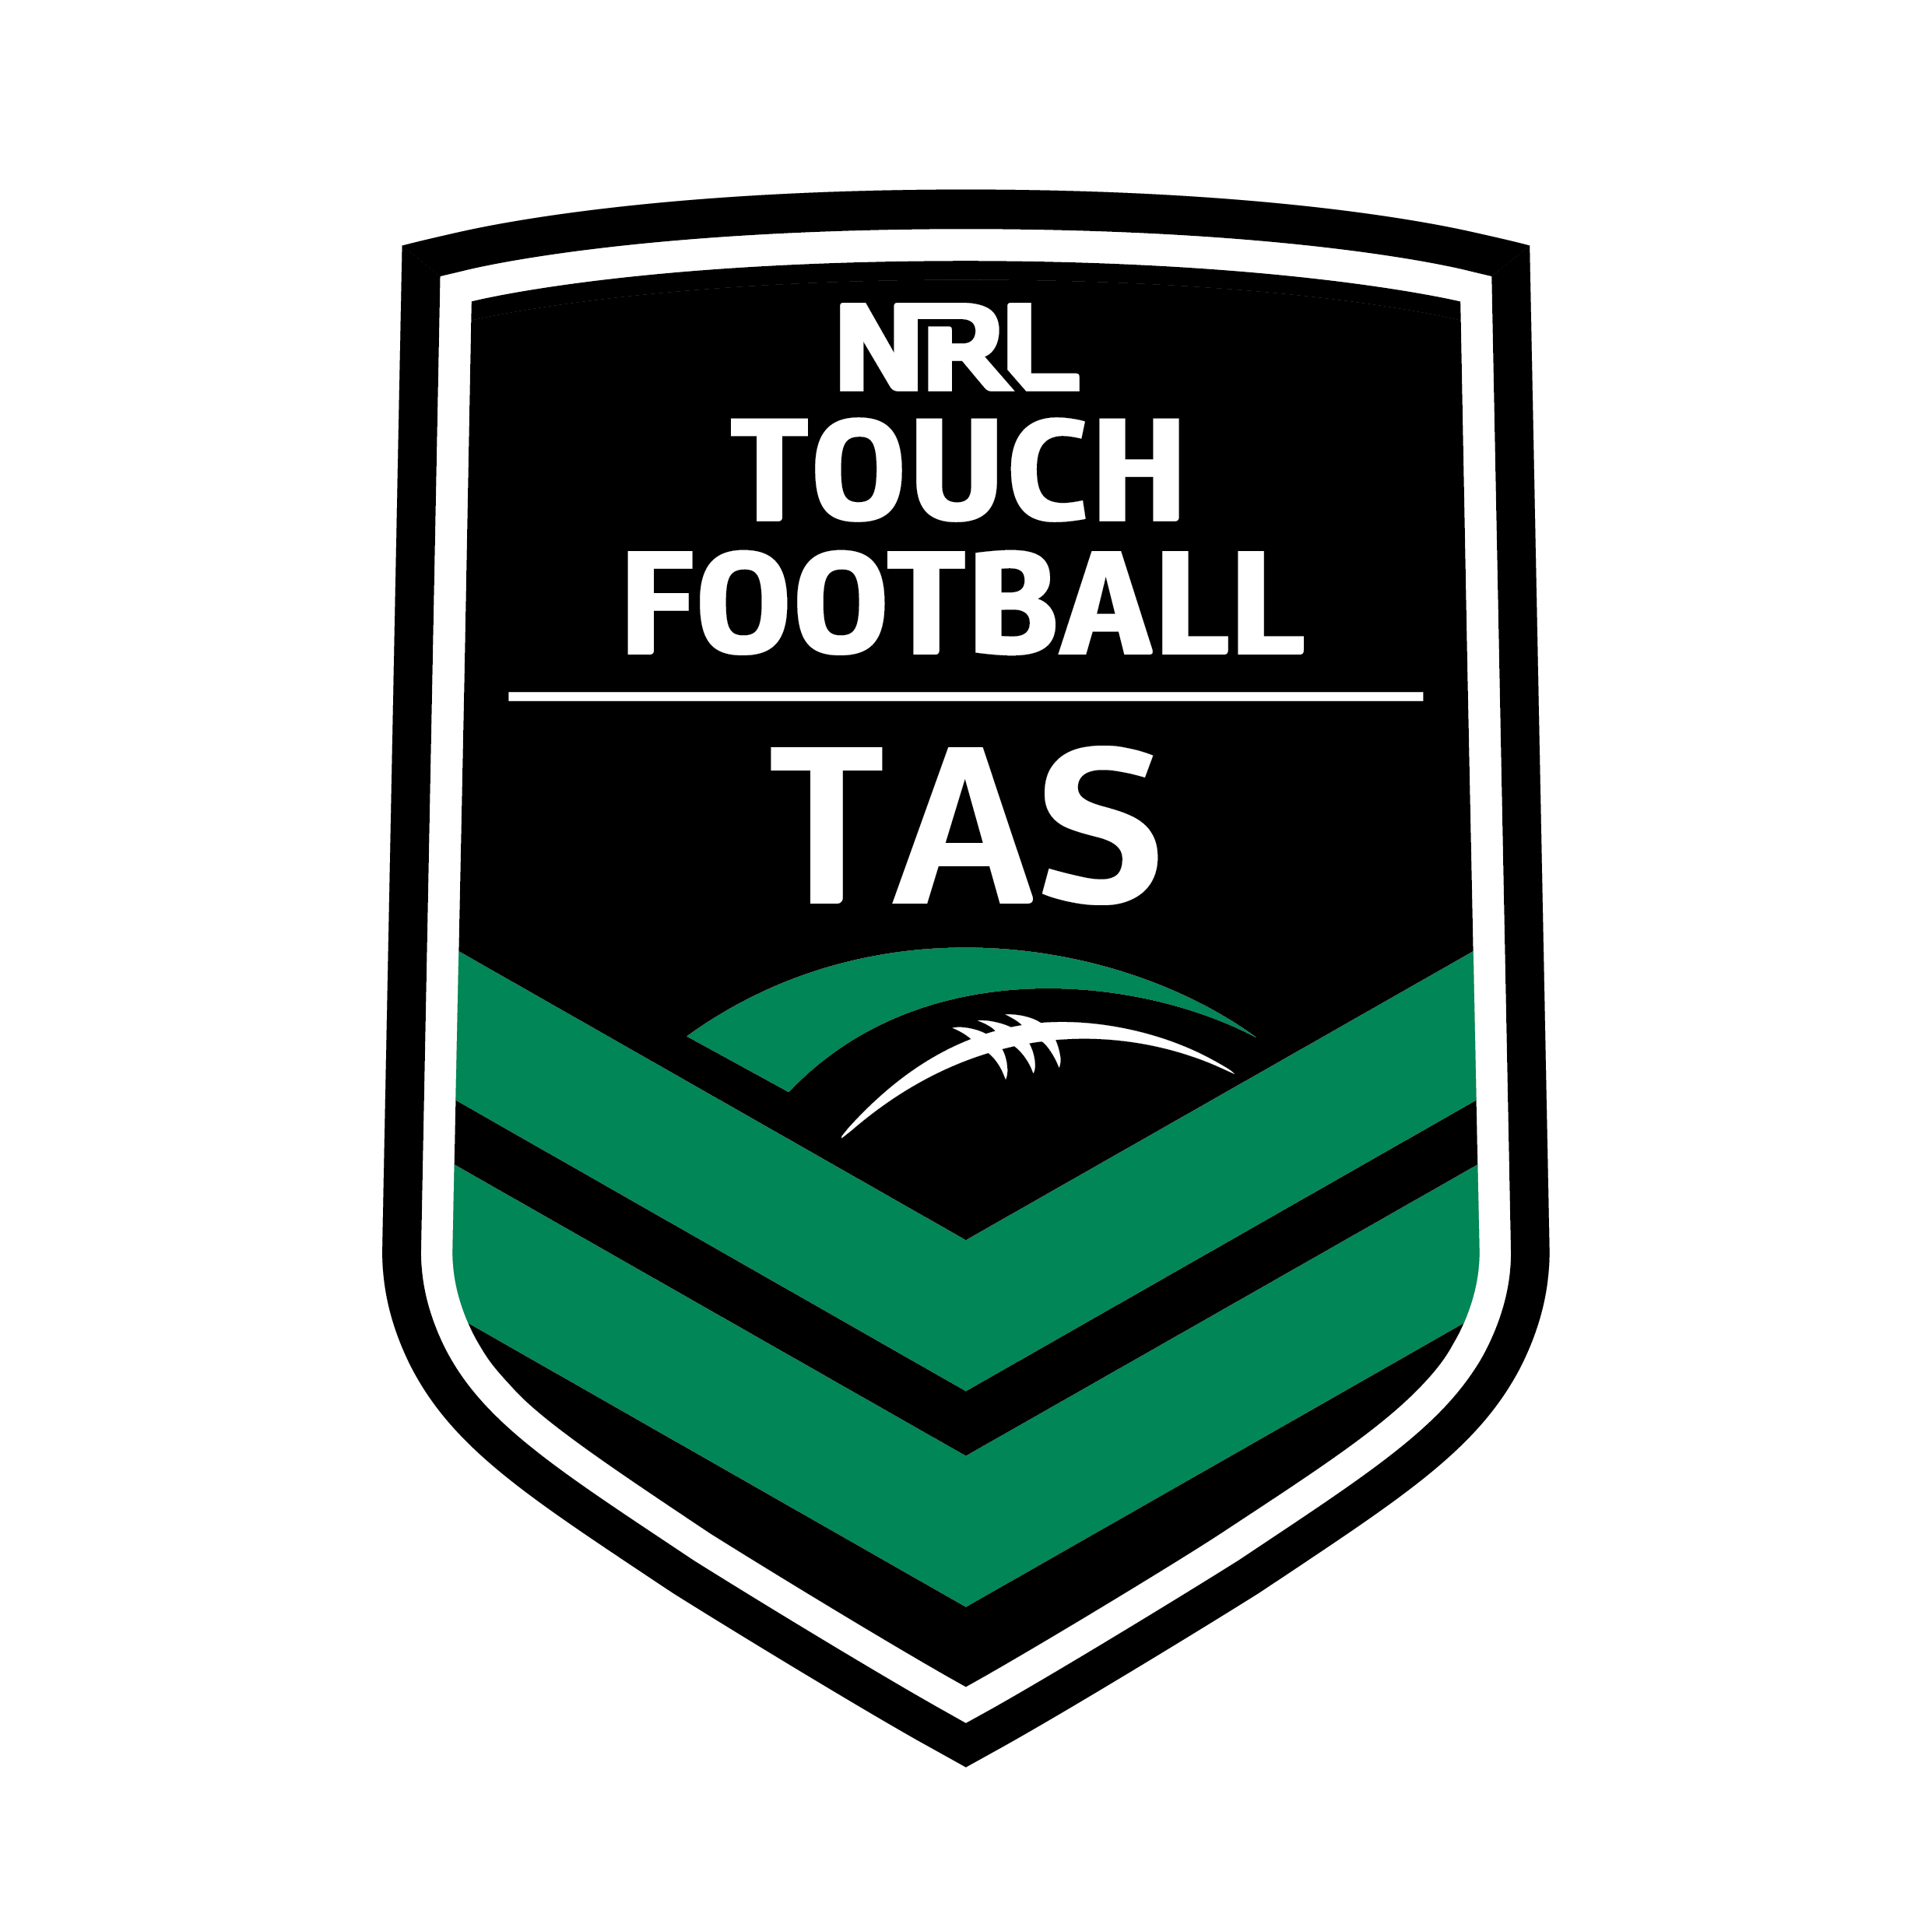 TAS - Touch Football Australia